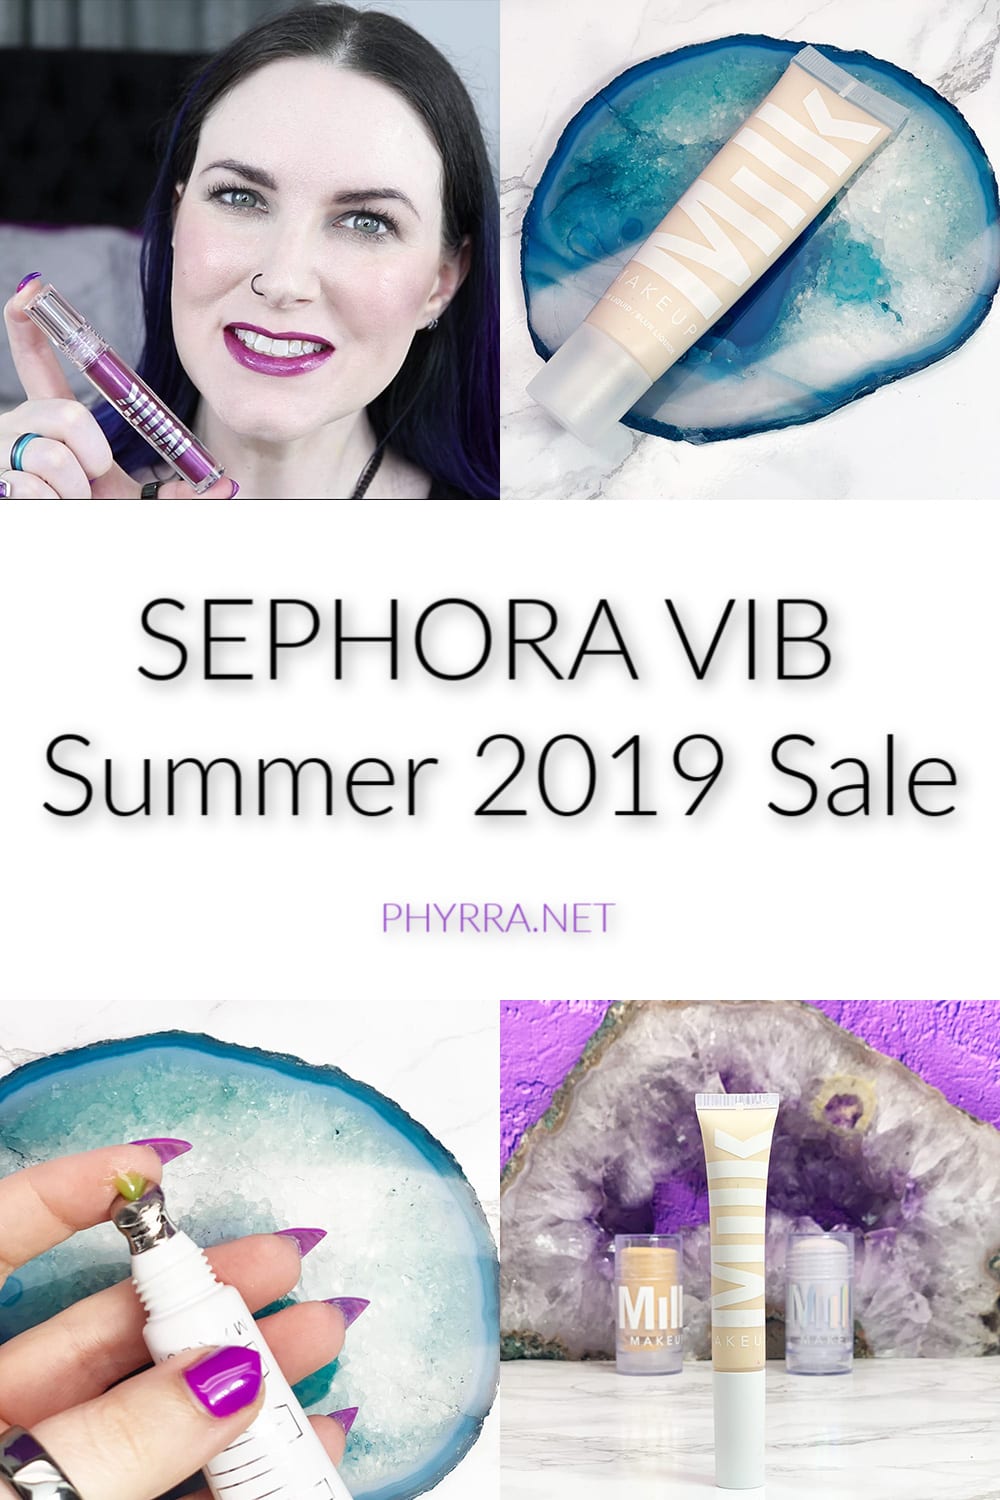 Sephora VIB Summer 2019 Sale